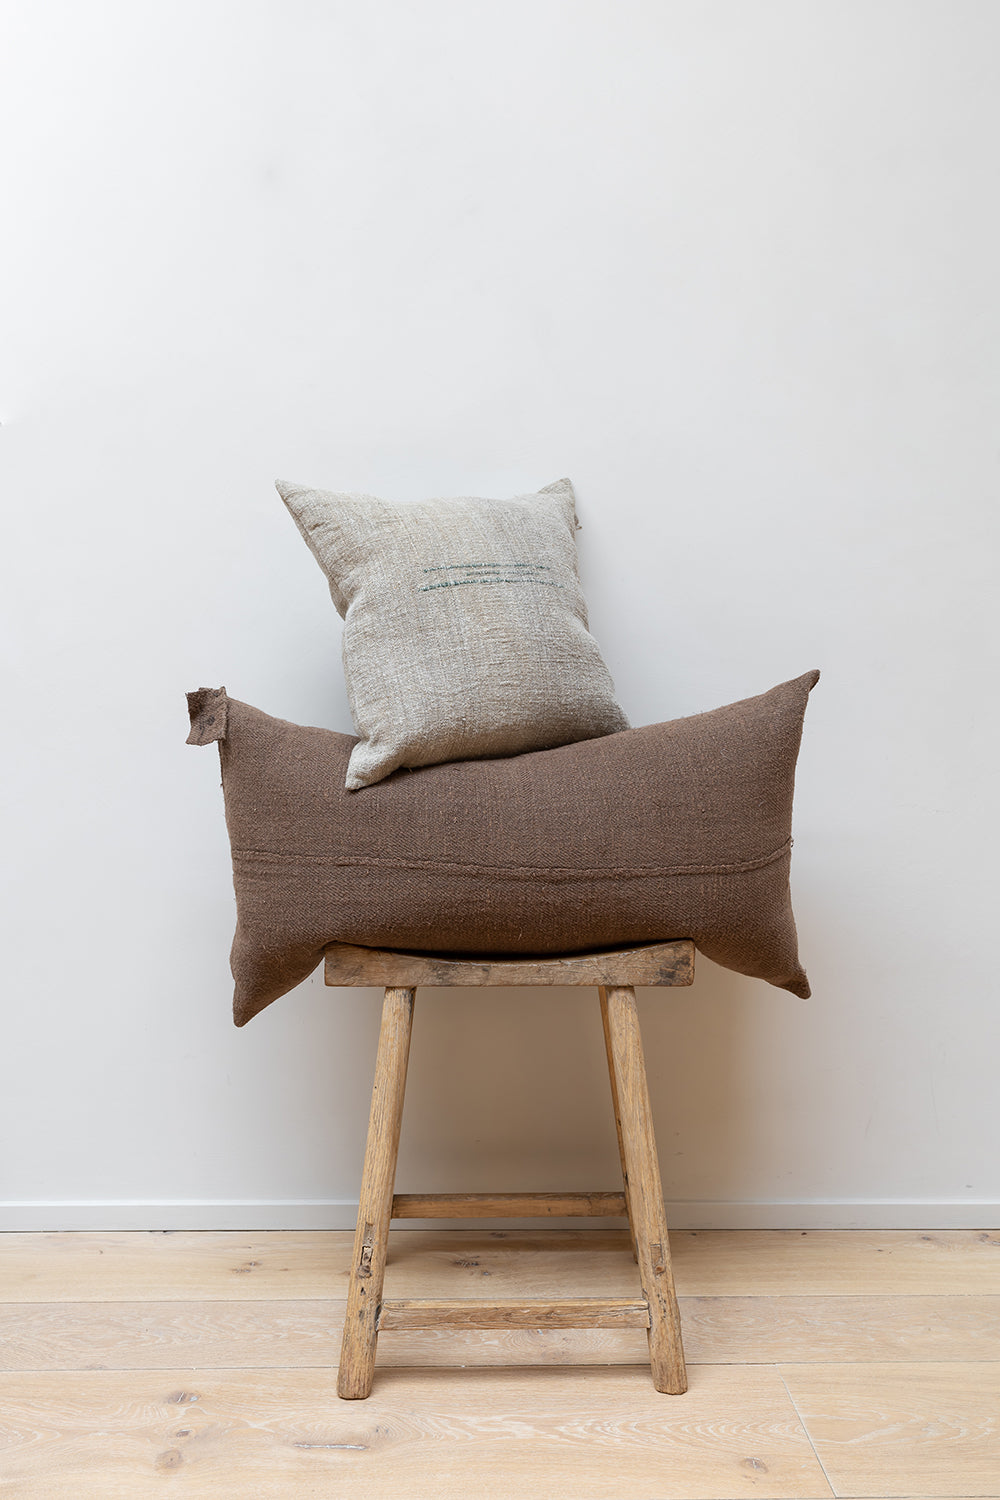 Two cushions by Isasbelle Yamamoto set on a Japanese style design stool.